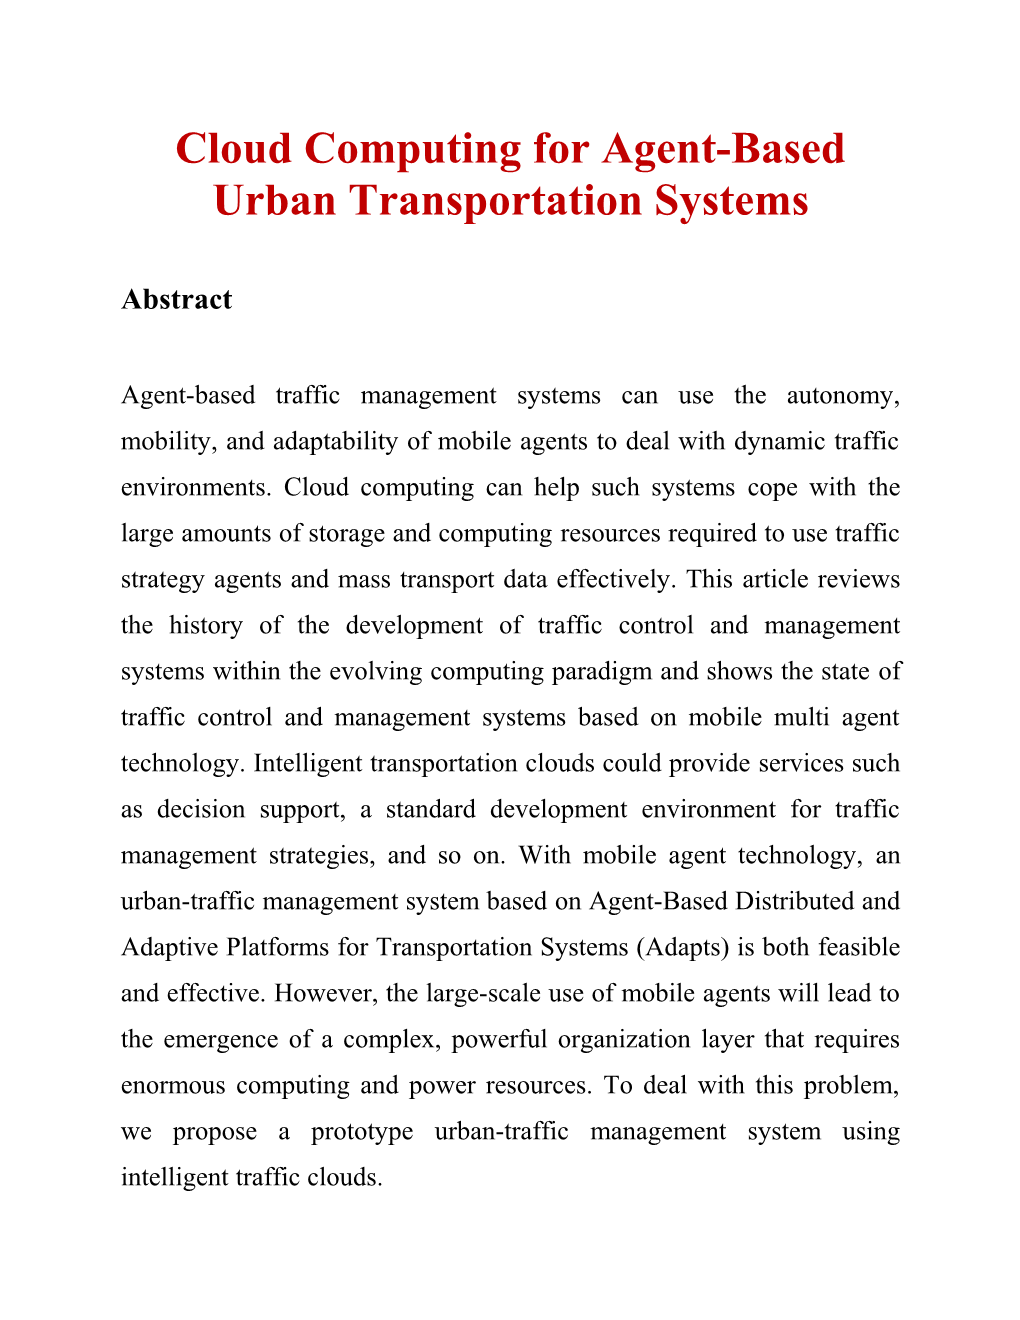 Cloud Computing Foragent-Based Urbantransportation Systems